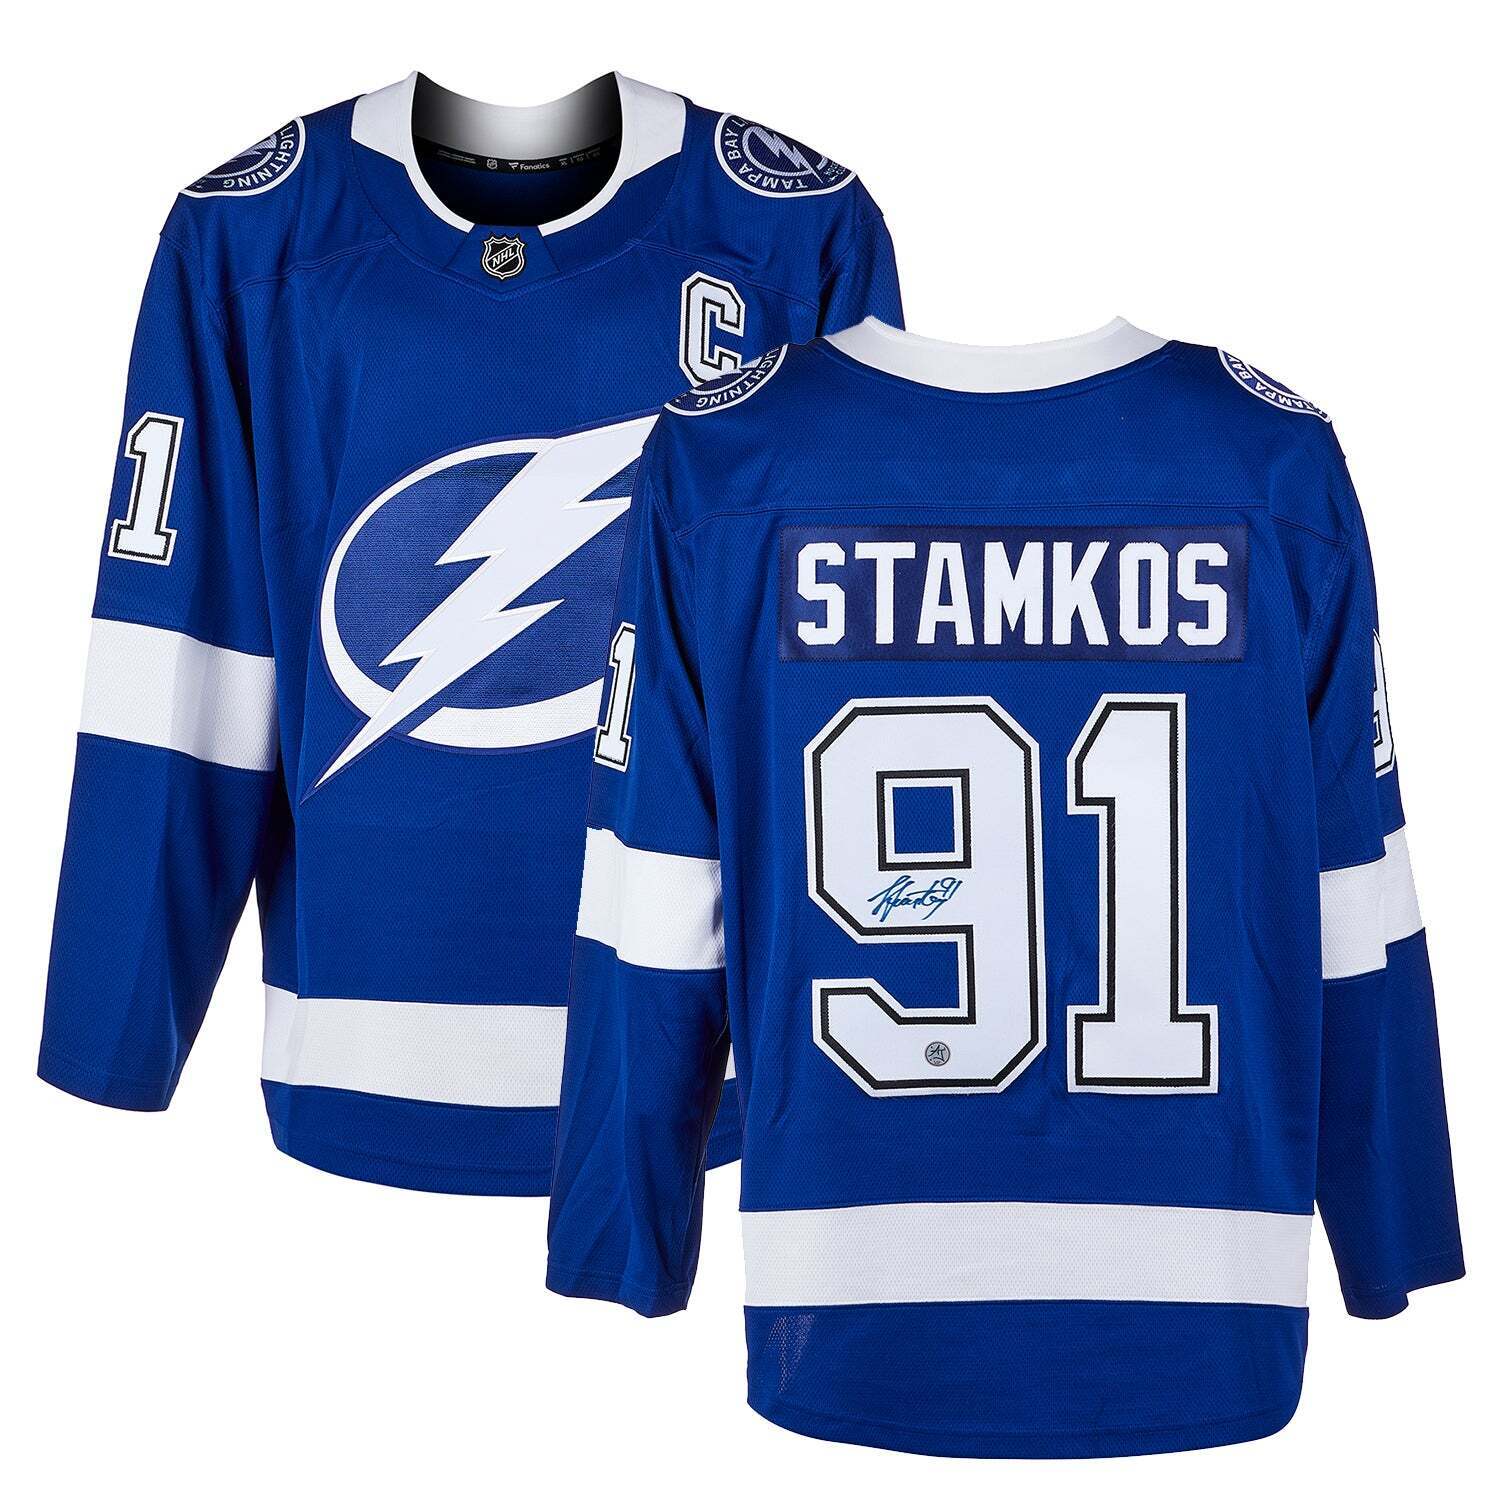 Steven Stamkos Tampa Bay Lightning Autographed White Fanatics